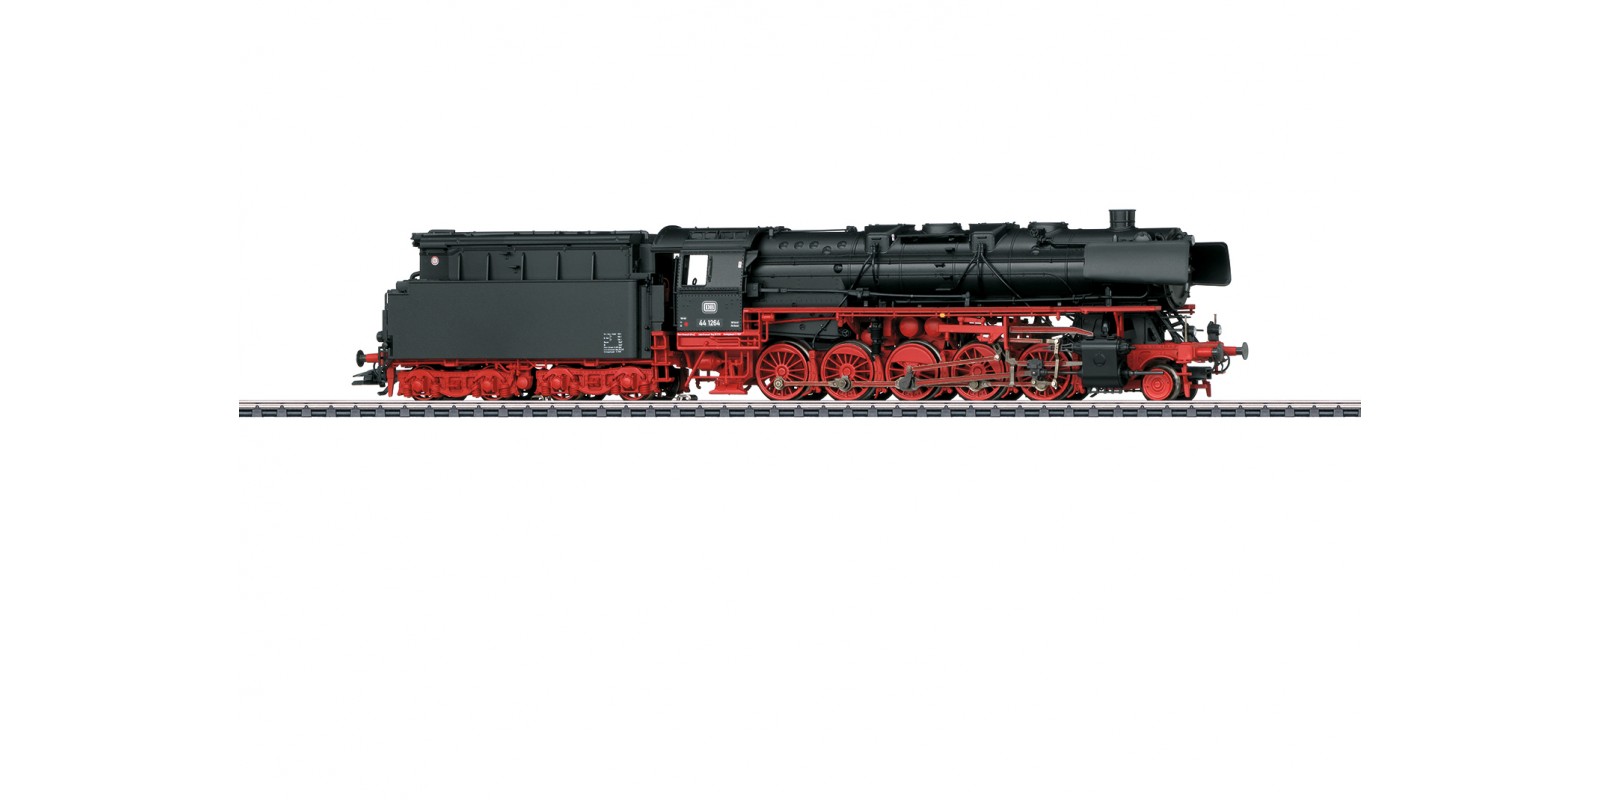 39880 Class 44 Steam Locomotive